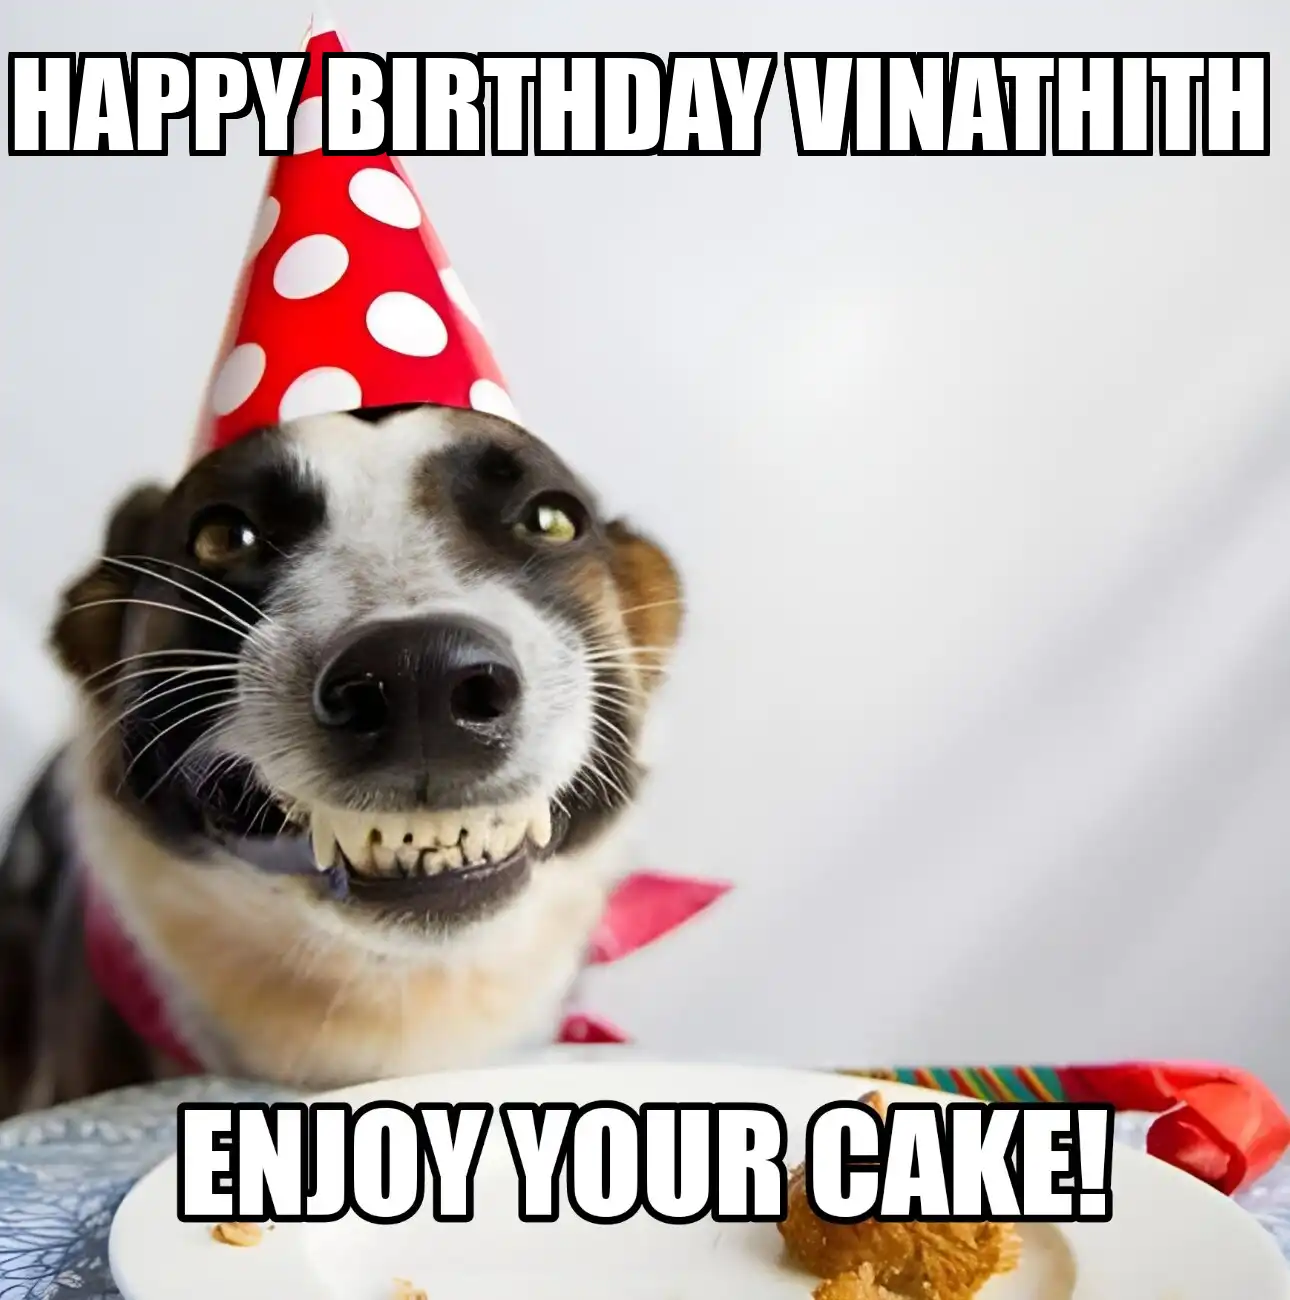 Happy Birthday Vinathith Enjoy Your Cake Dog Meme